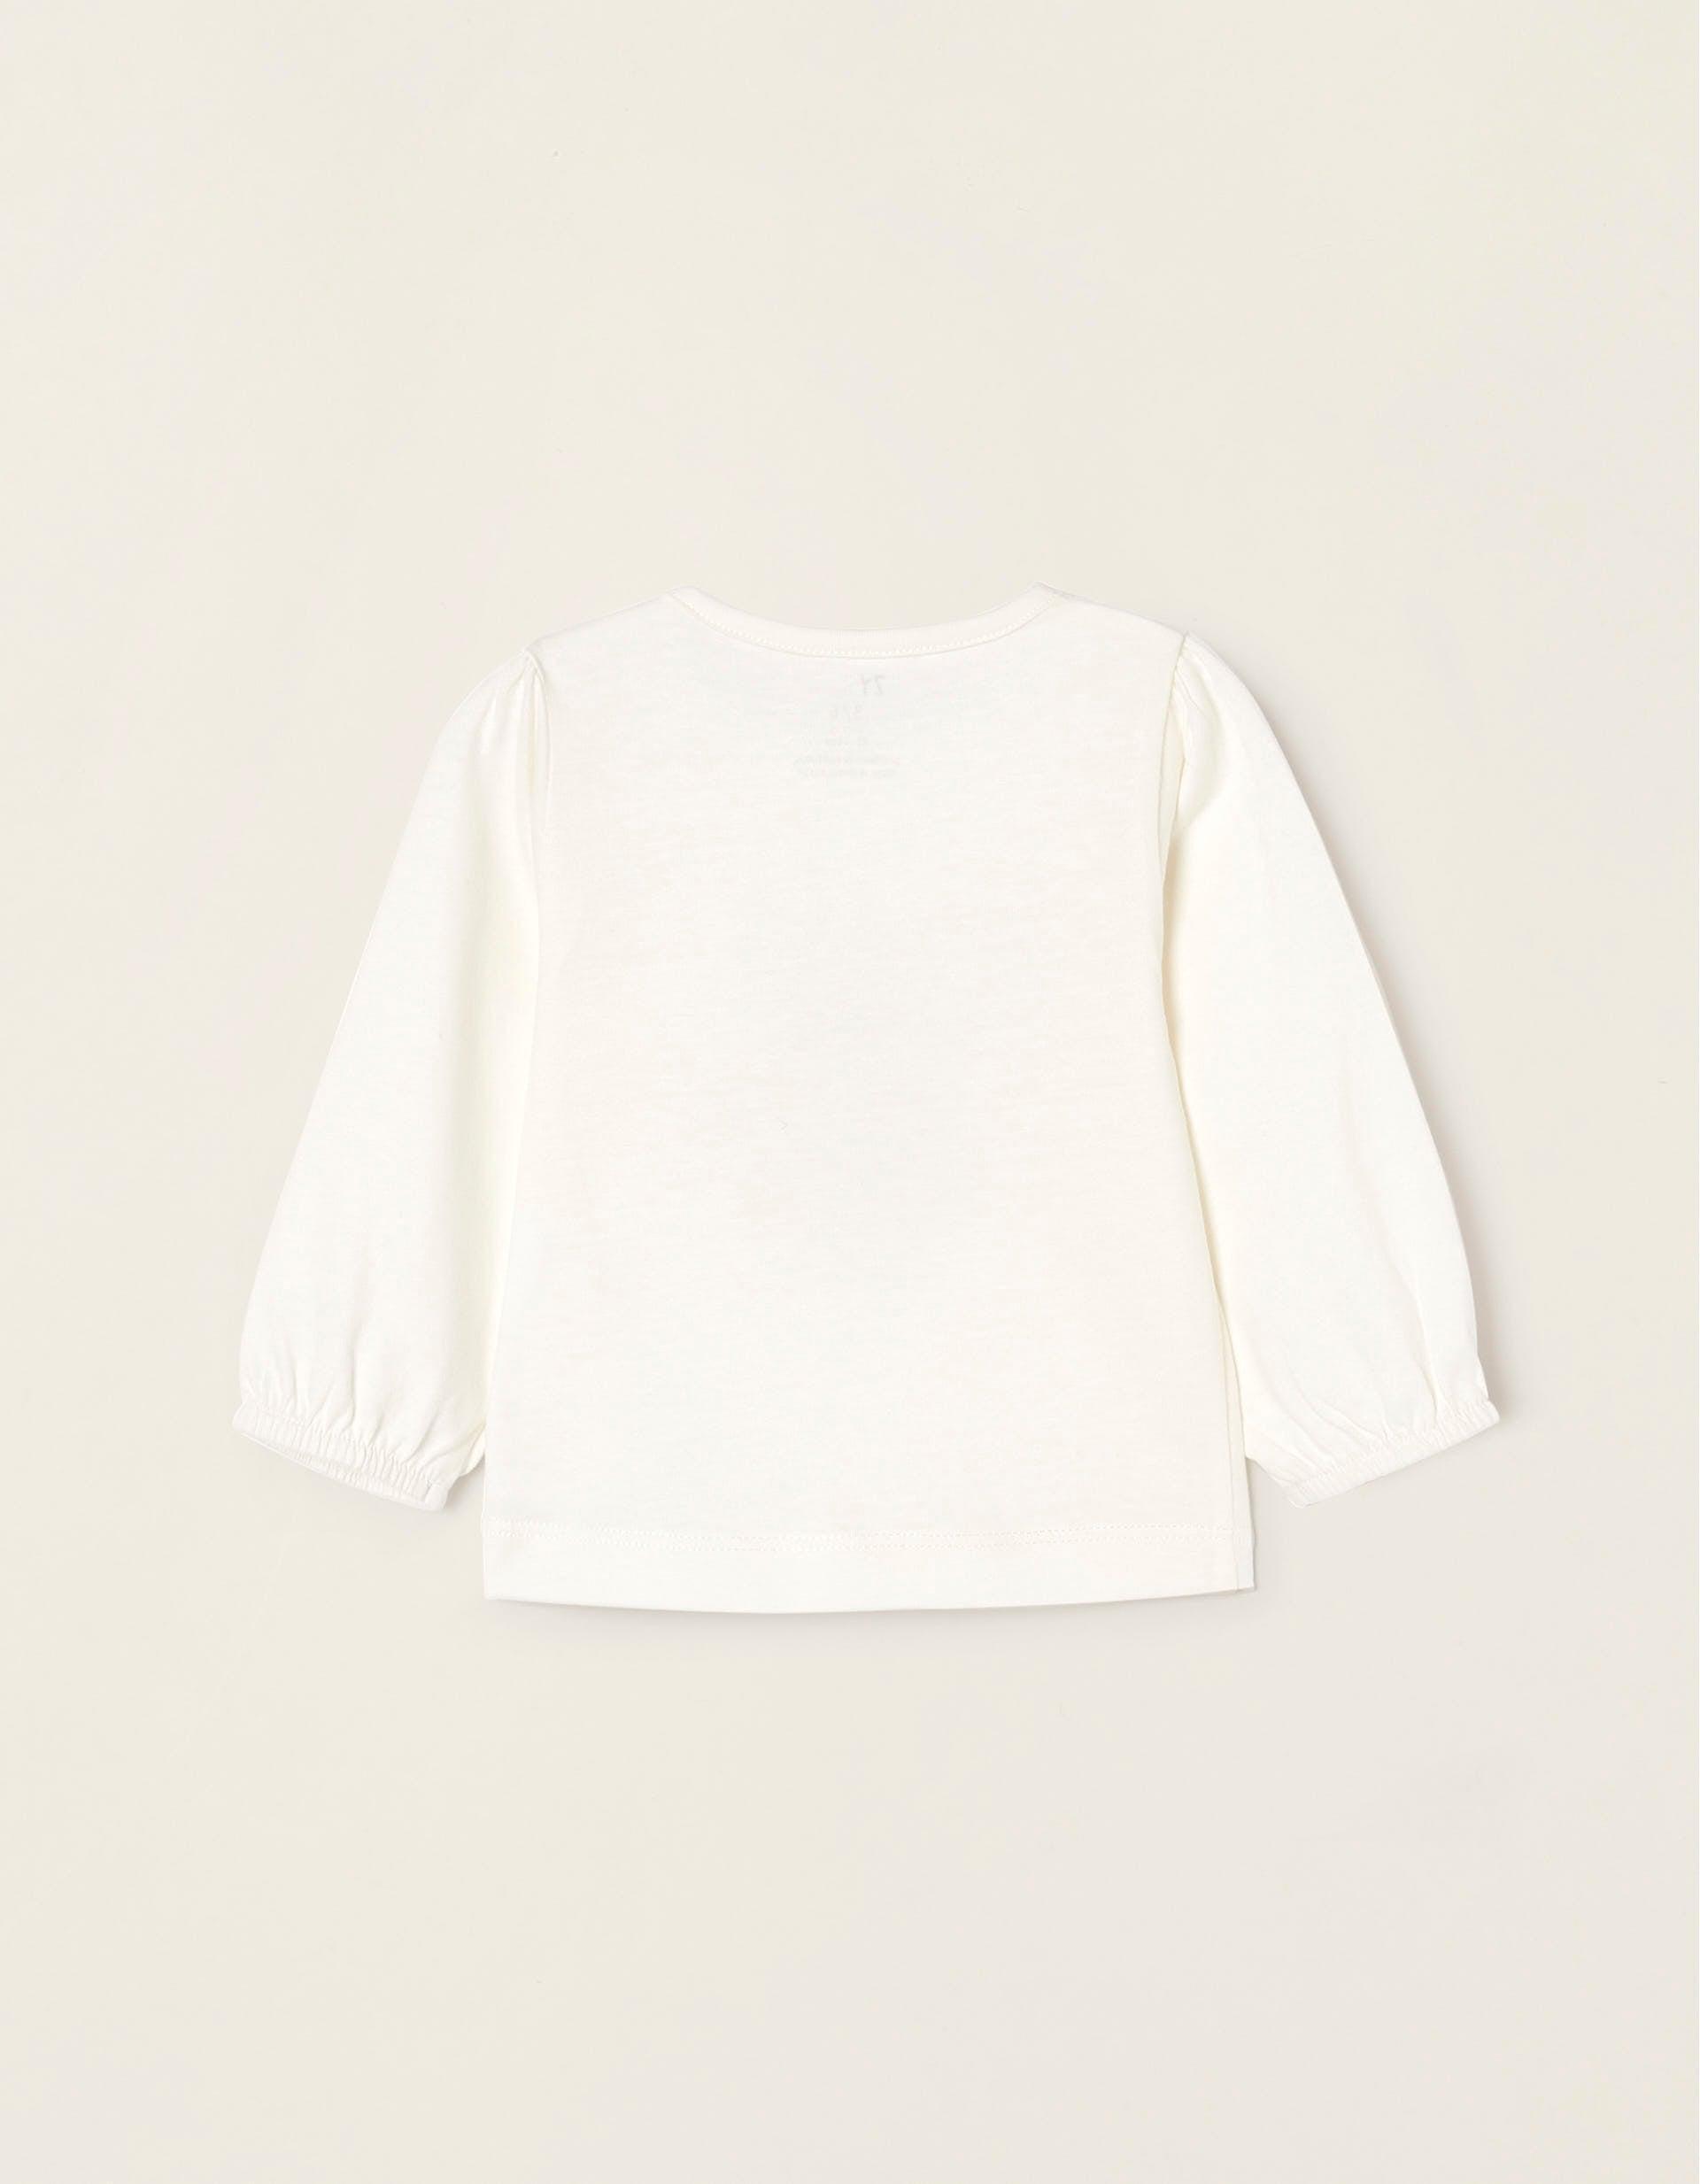 Zippy - White Long-Sleeve Cotton T-Shirt, Baby Girls